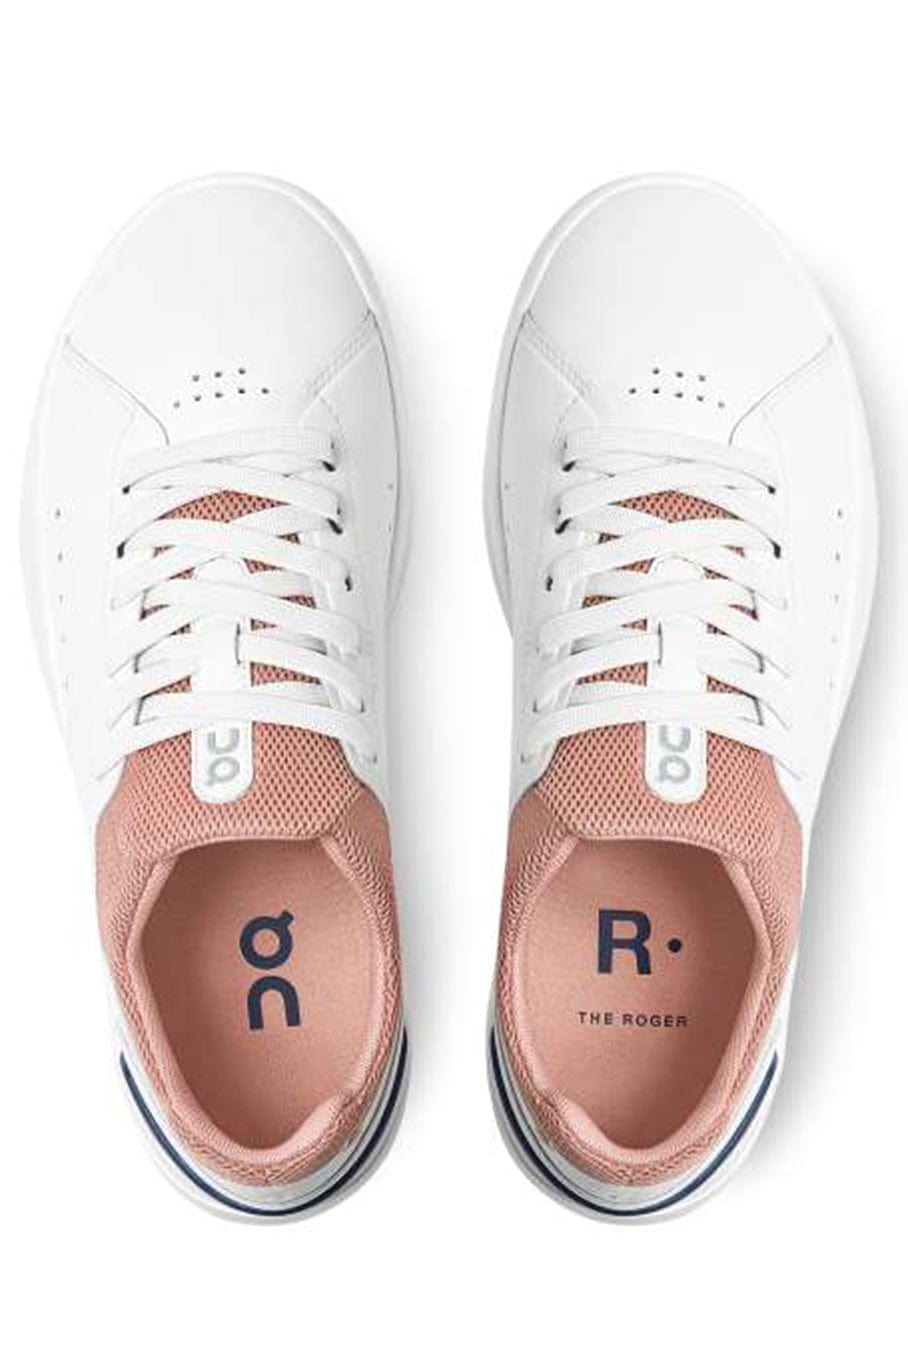 ON RUNNING-The Roger Advantage Sneaker - Dusty Rose-